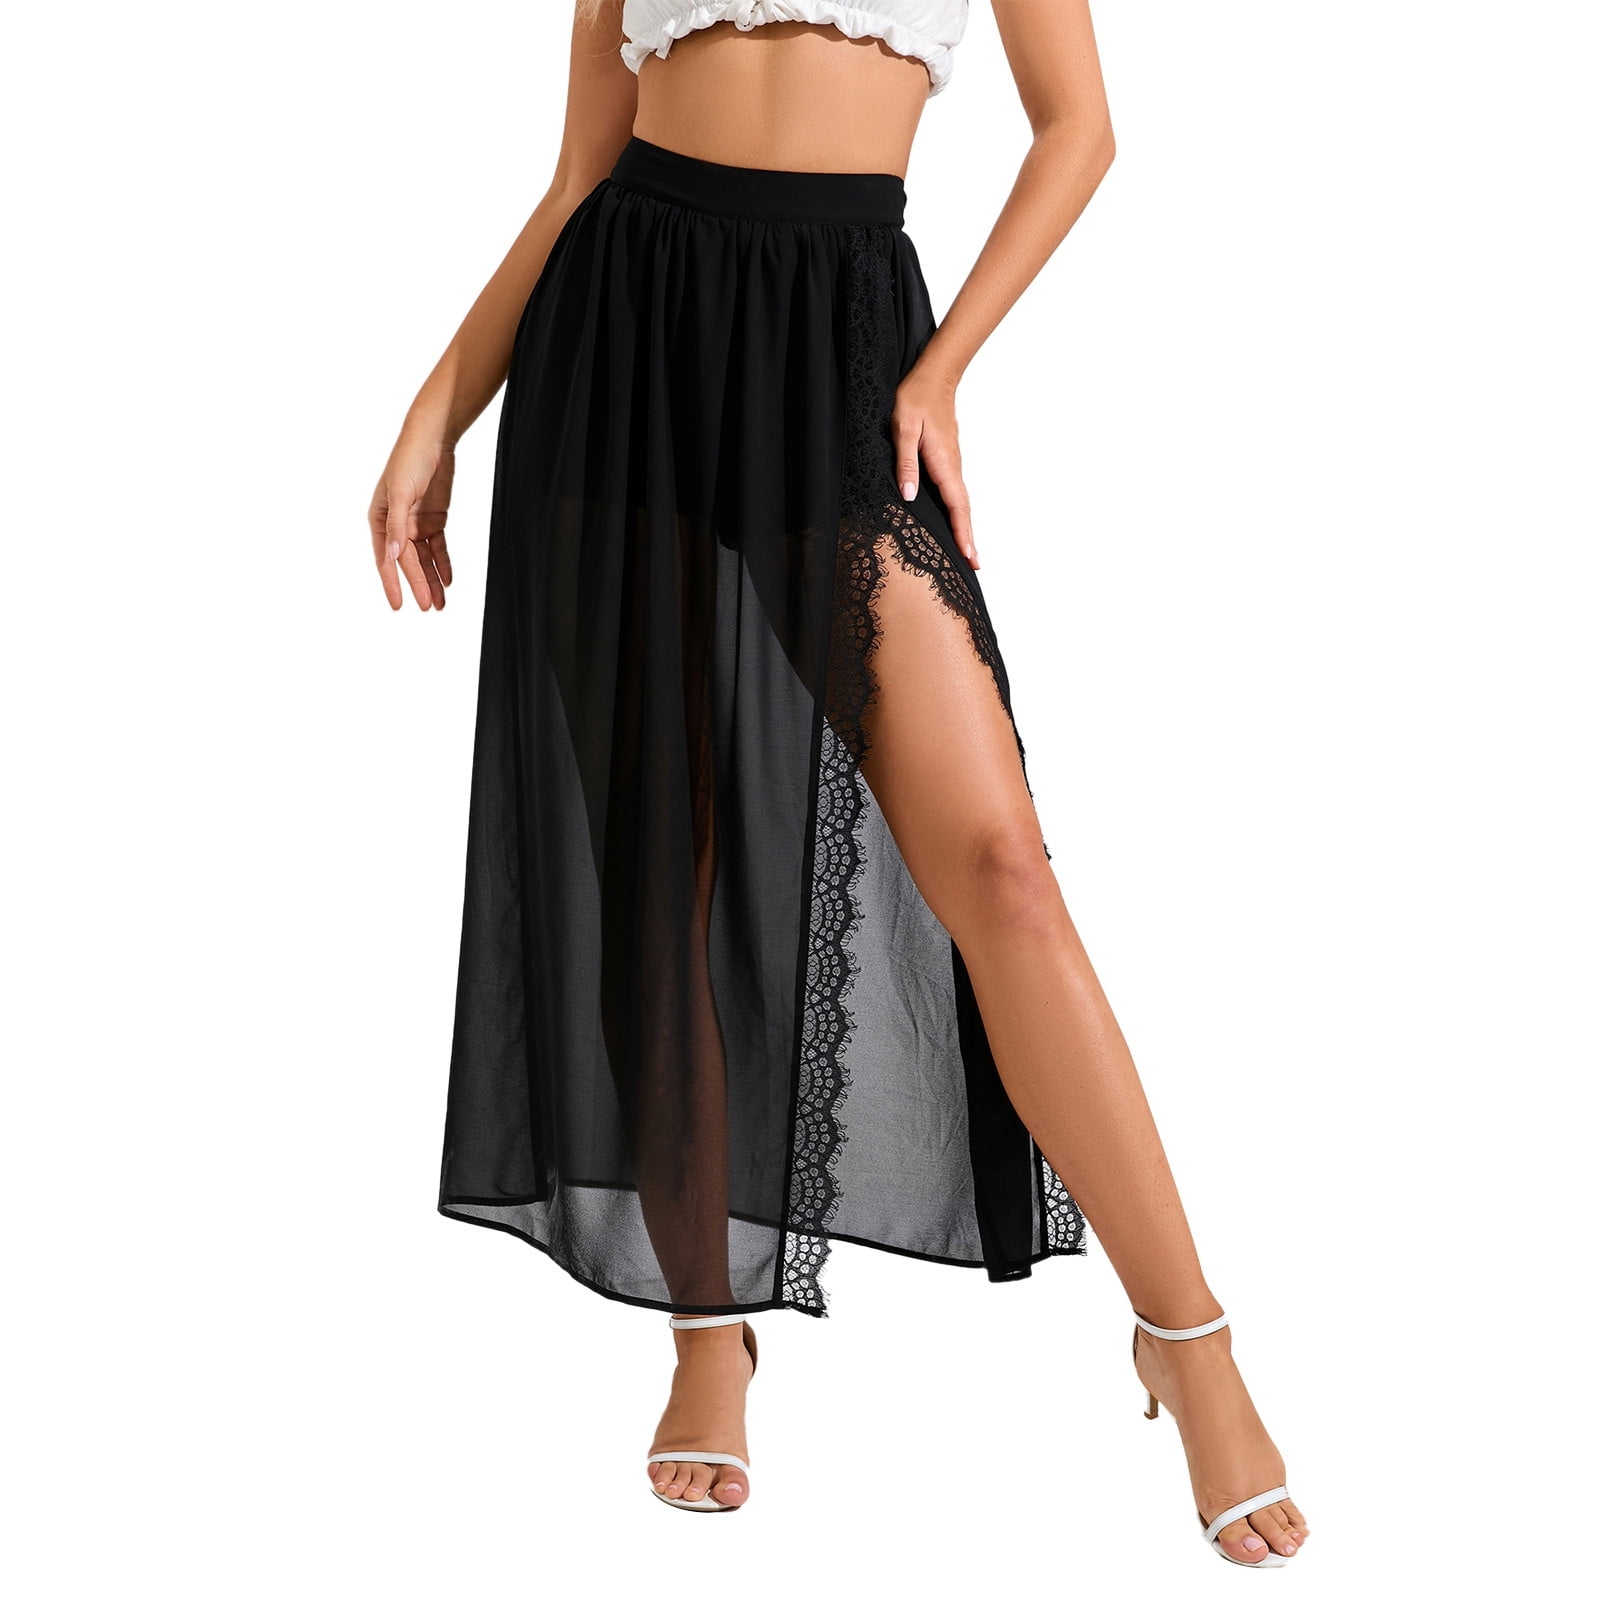 Vedolay Women's New Summer Lace Side split High Waist Long Skirts,Black XL